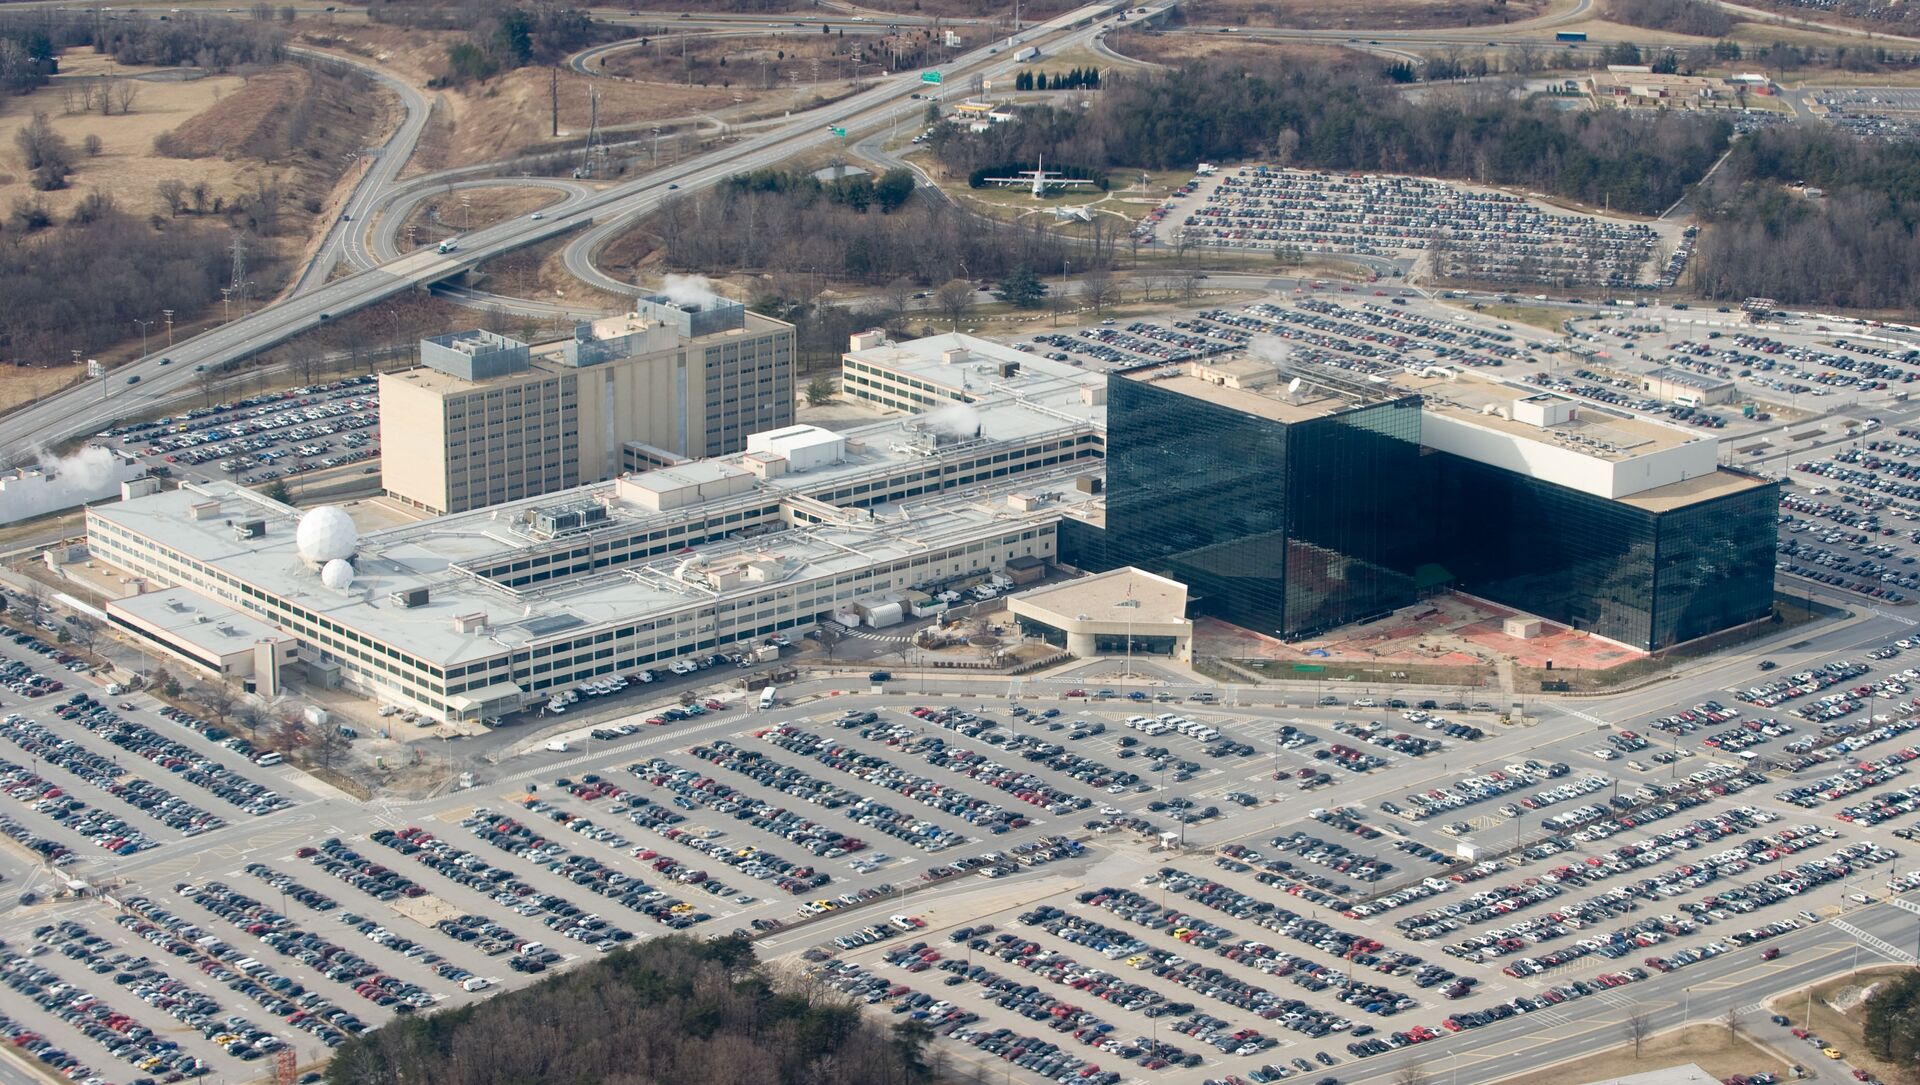 The National Security Agency (NSA) headquarters at Fort Meade, Maryland. - Sputnik Afrique, 1920, 10.06.2021